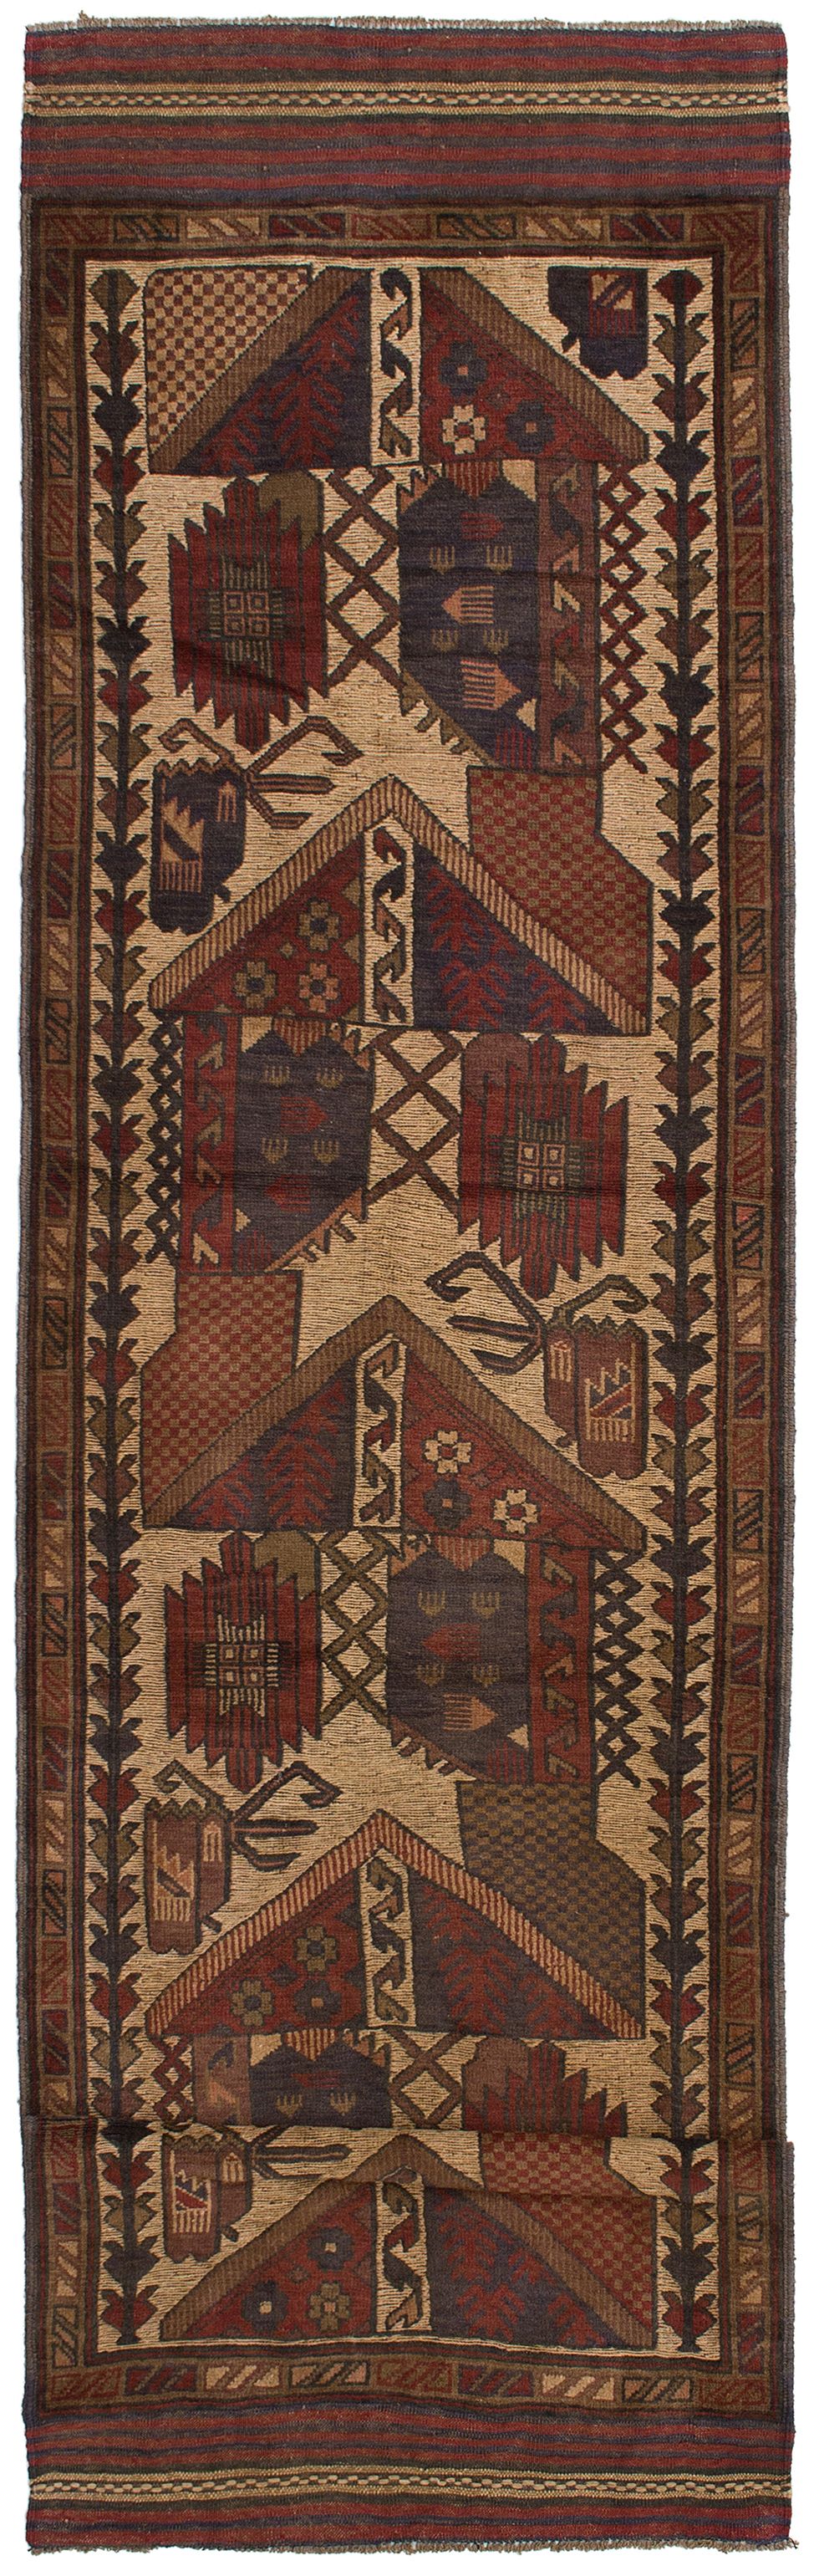 Hand-knotted Tajik Caucasian Beige, Red Wool Rug 2'10" x 12'2" Size: 2'10" x 12'2"  